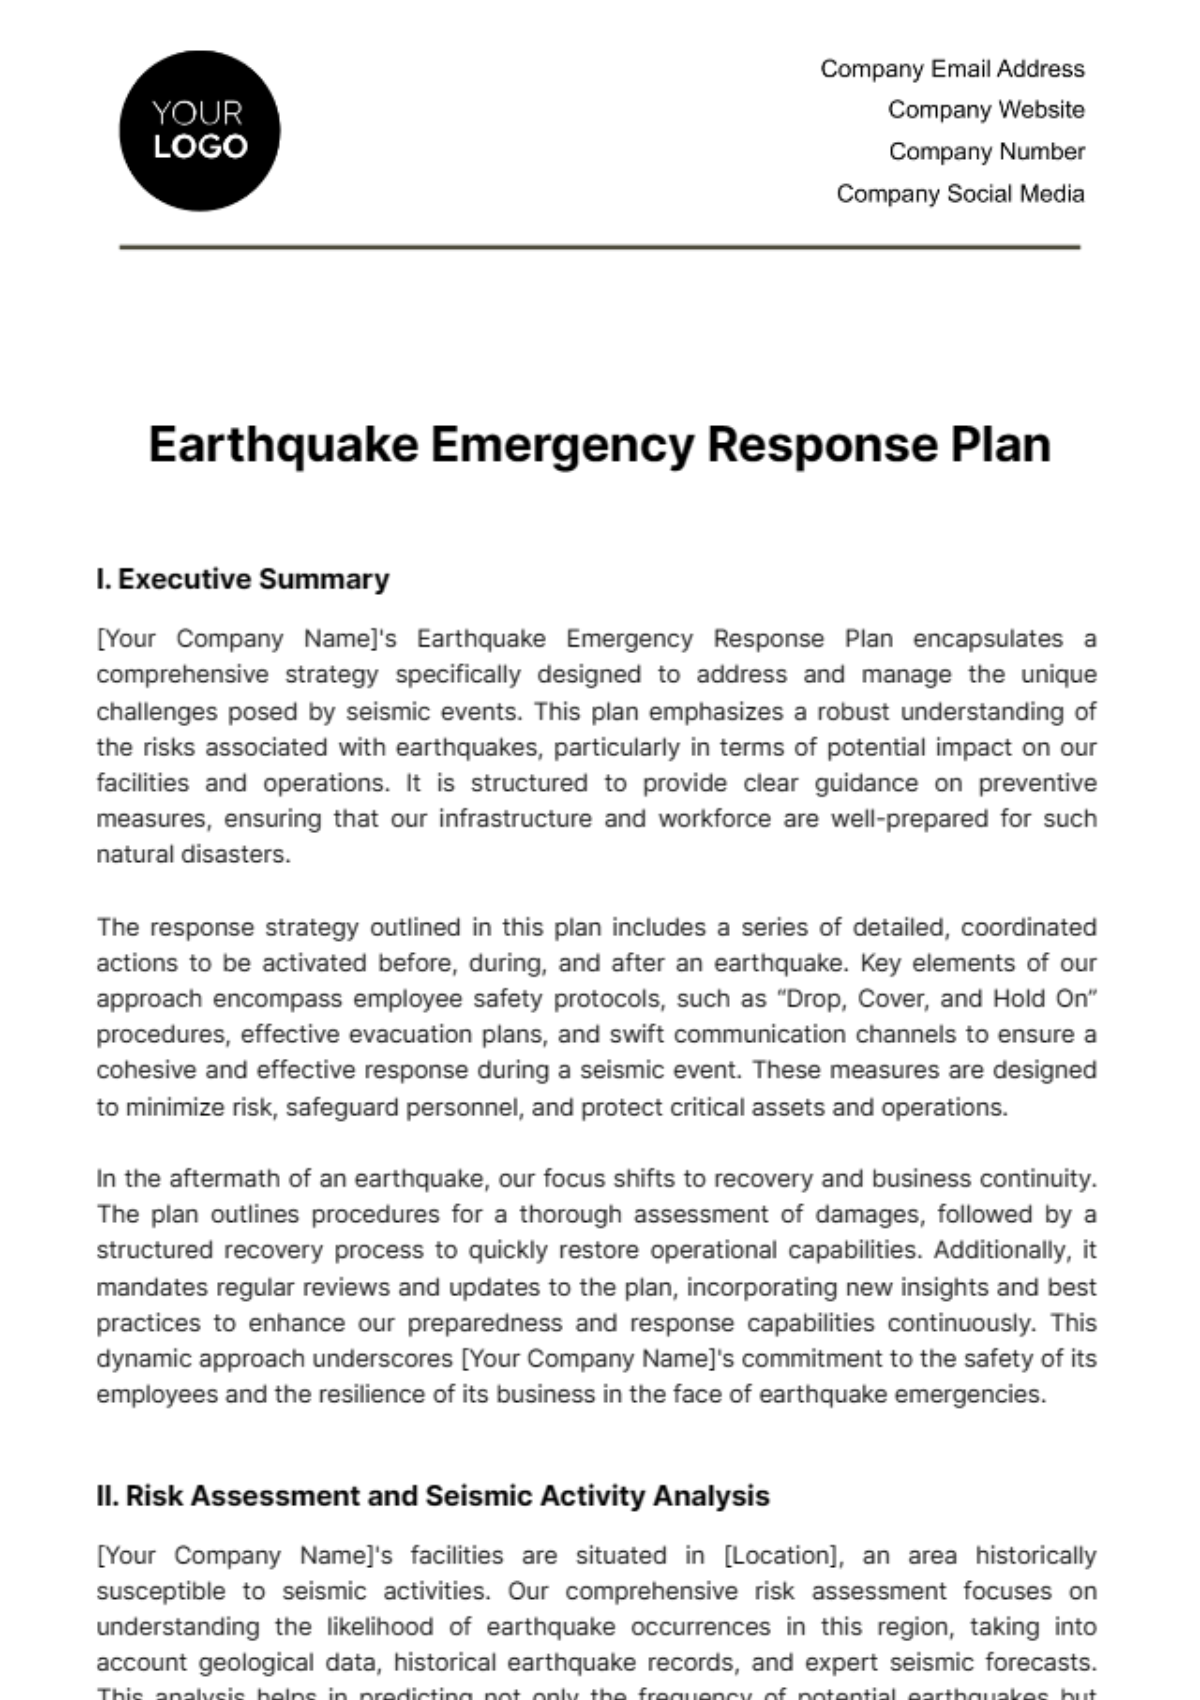 Free Earthquake Emergency Response Plan Template